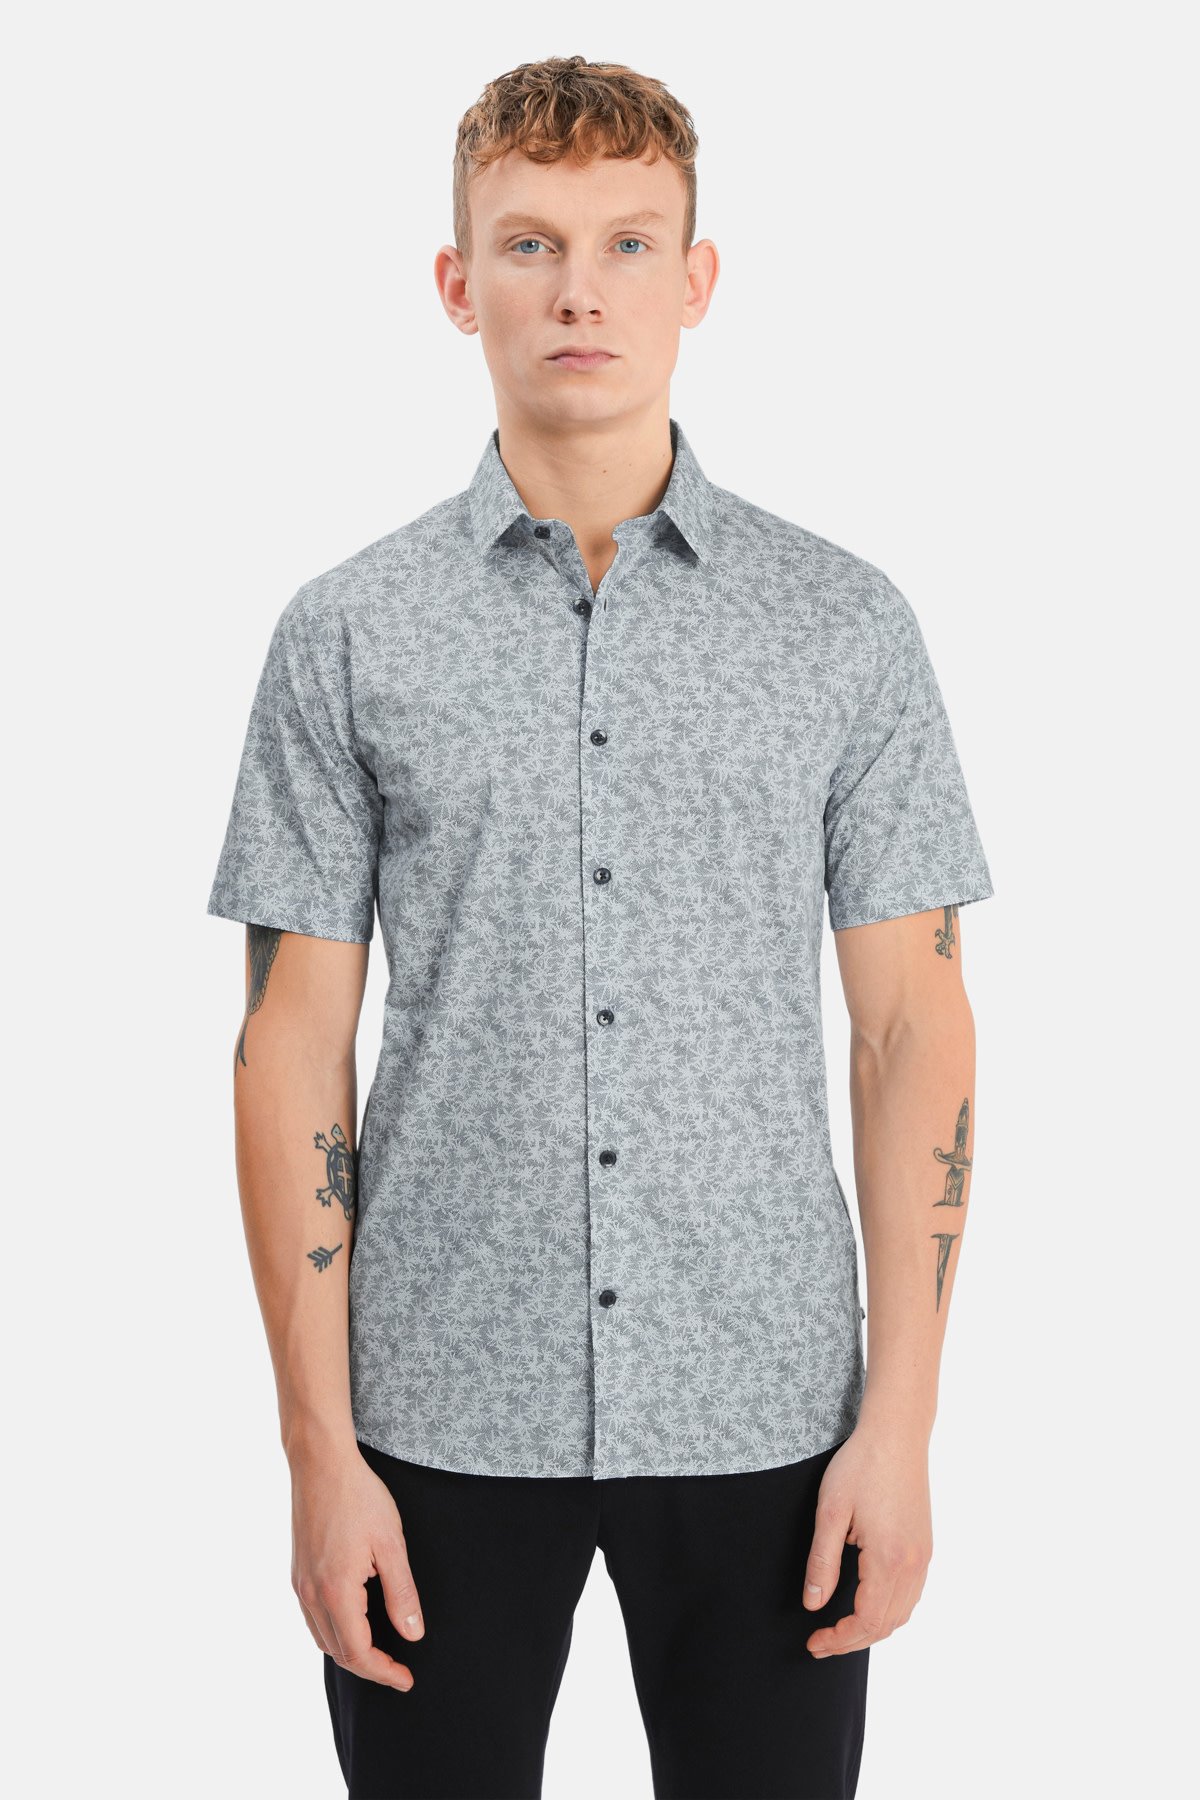 Trostol Short Sleeve Dress Shirt - Navy Dotted Print